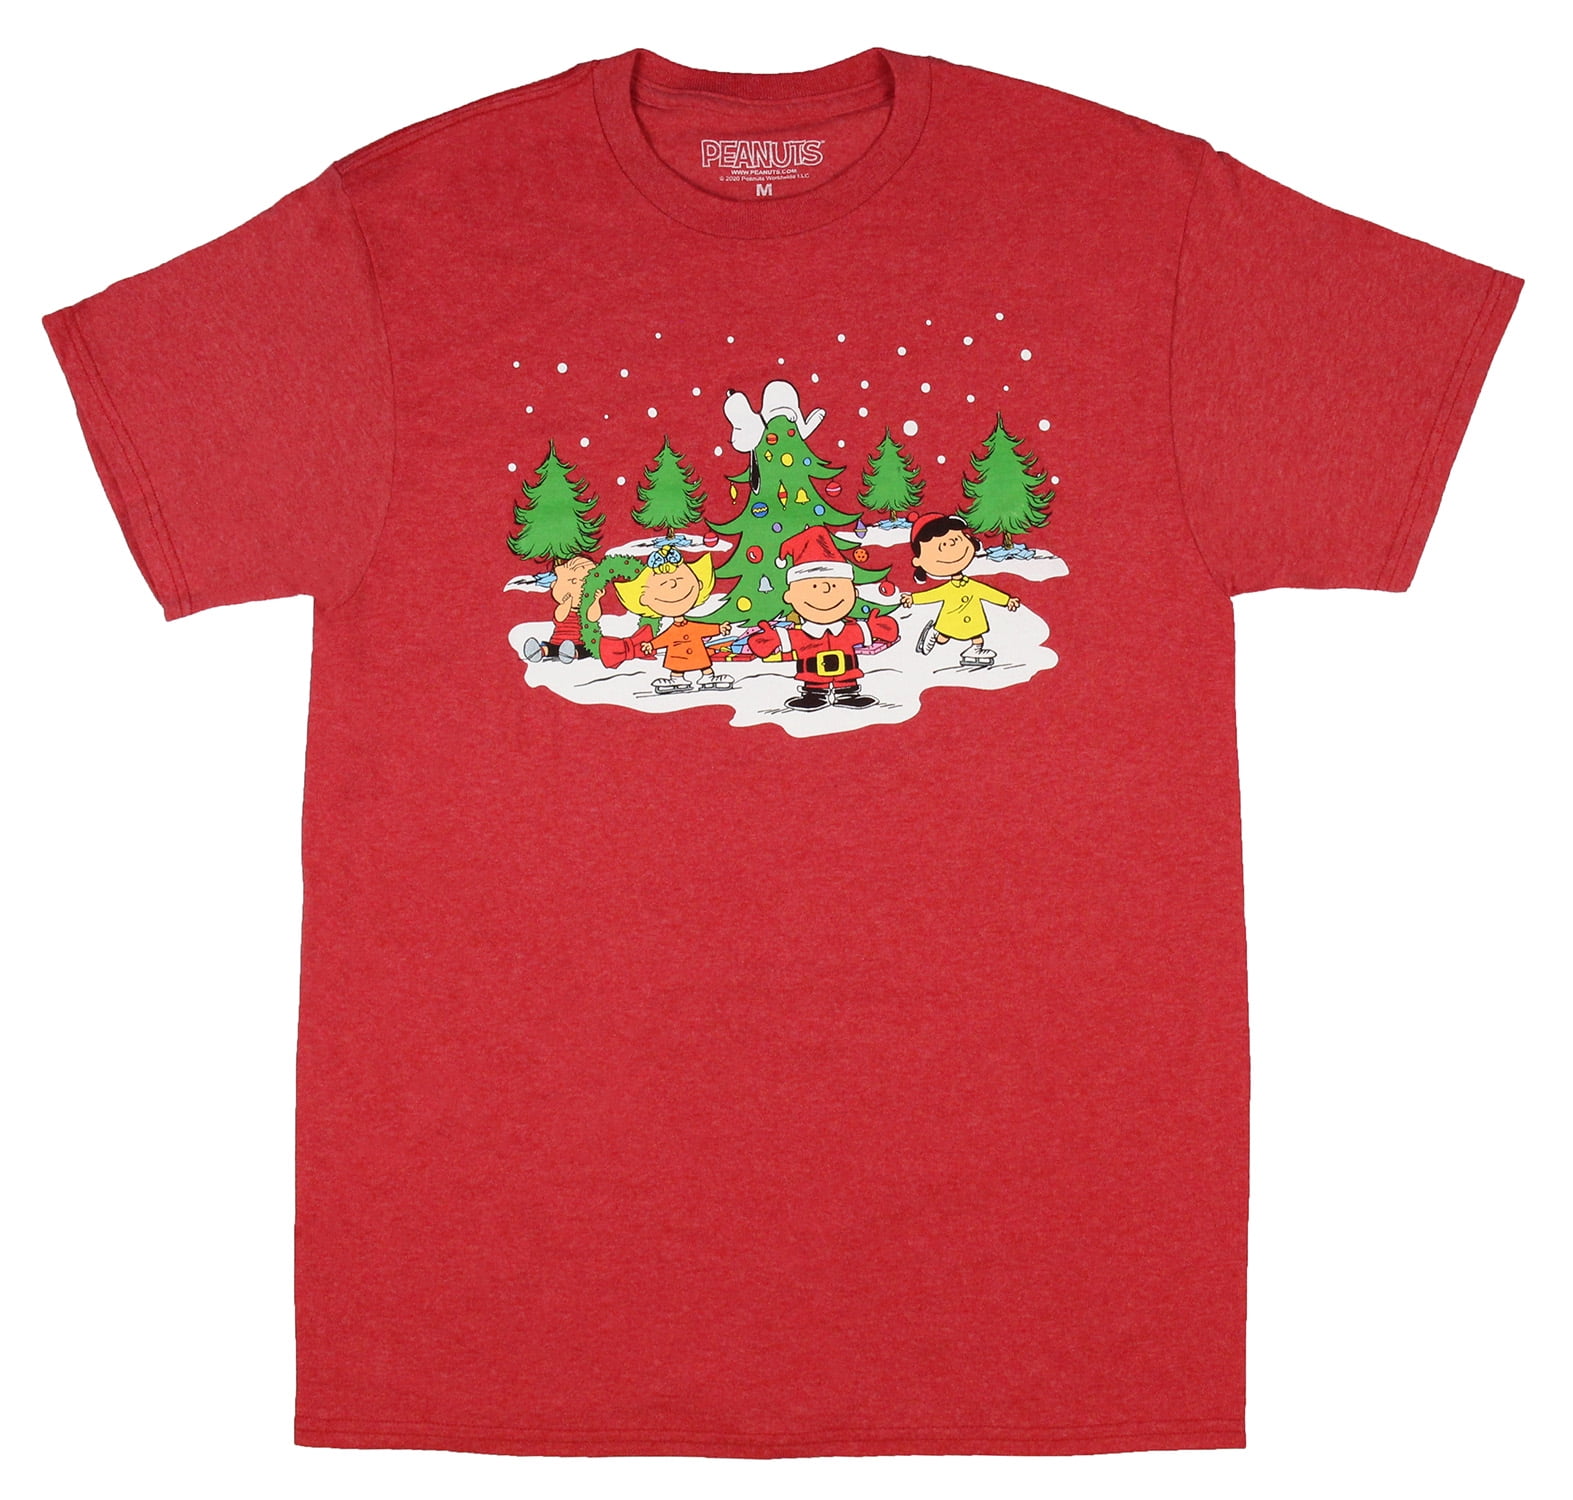 Peanuts Christmas T-Shirt SS 'A Charlie Brown Christmas' Red Men's XL 